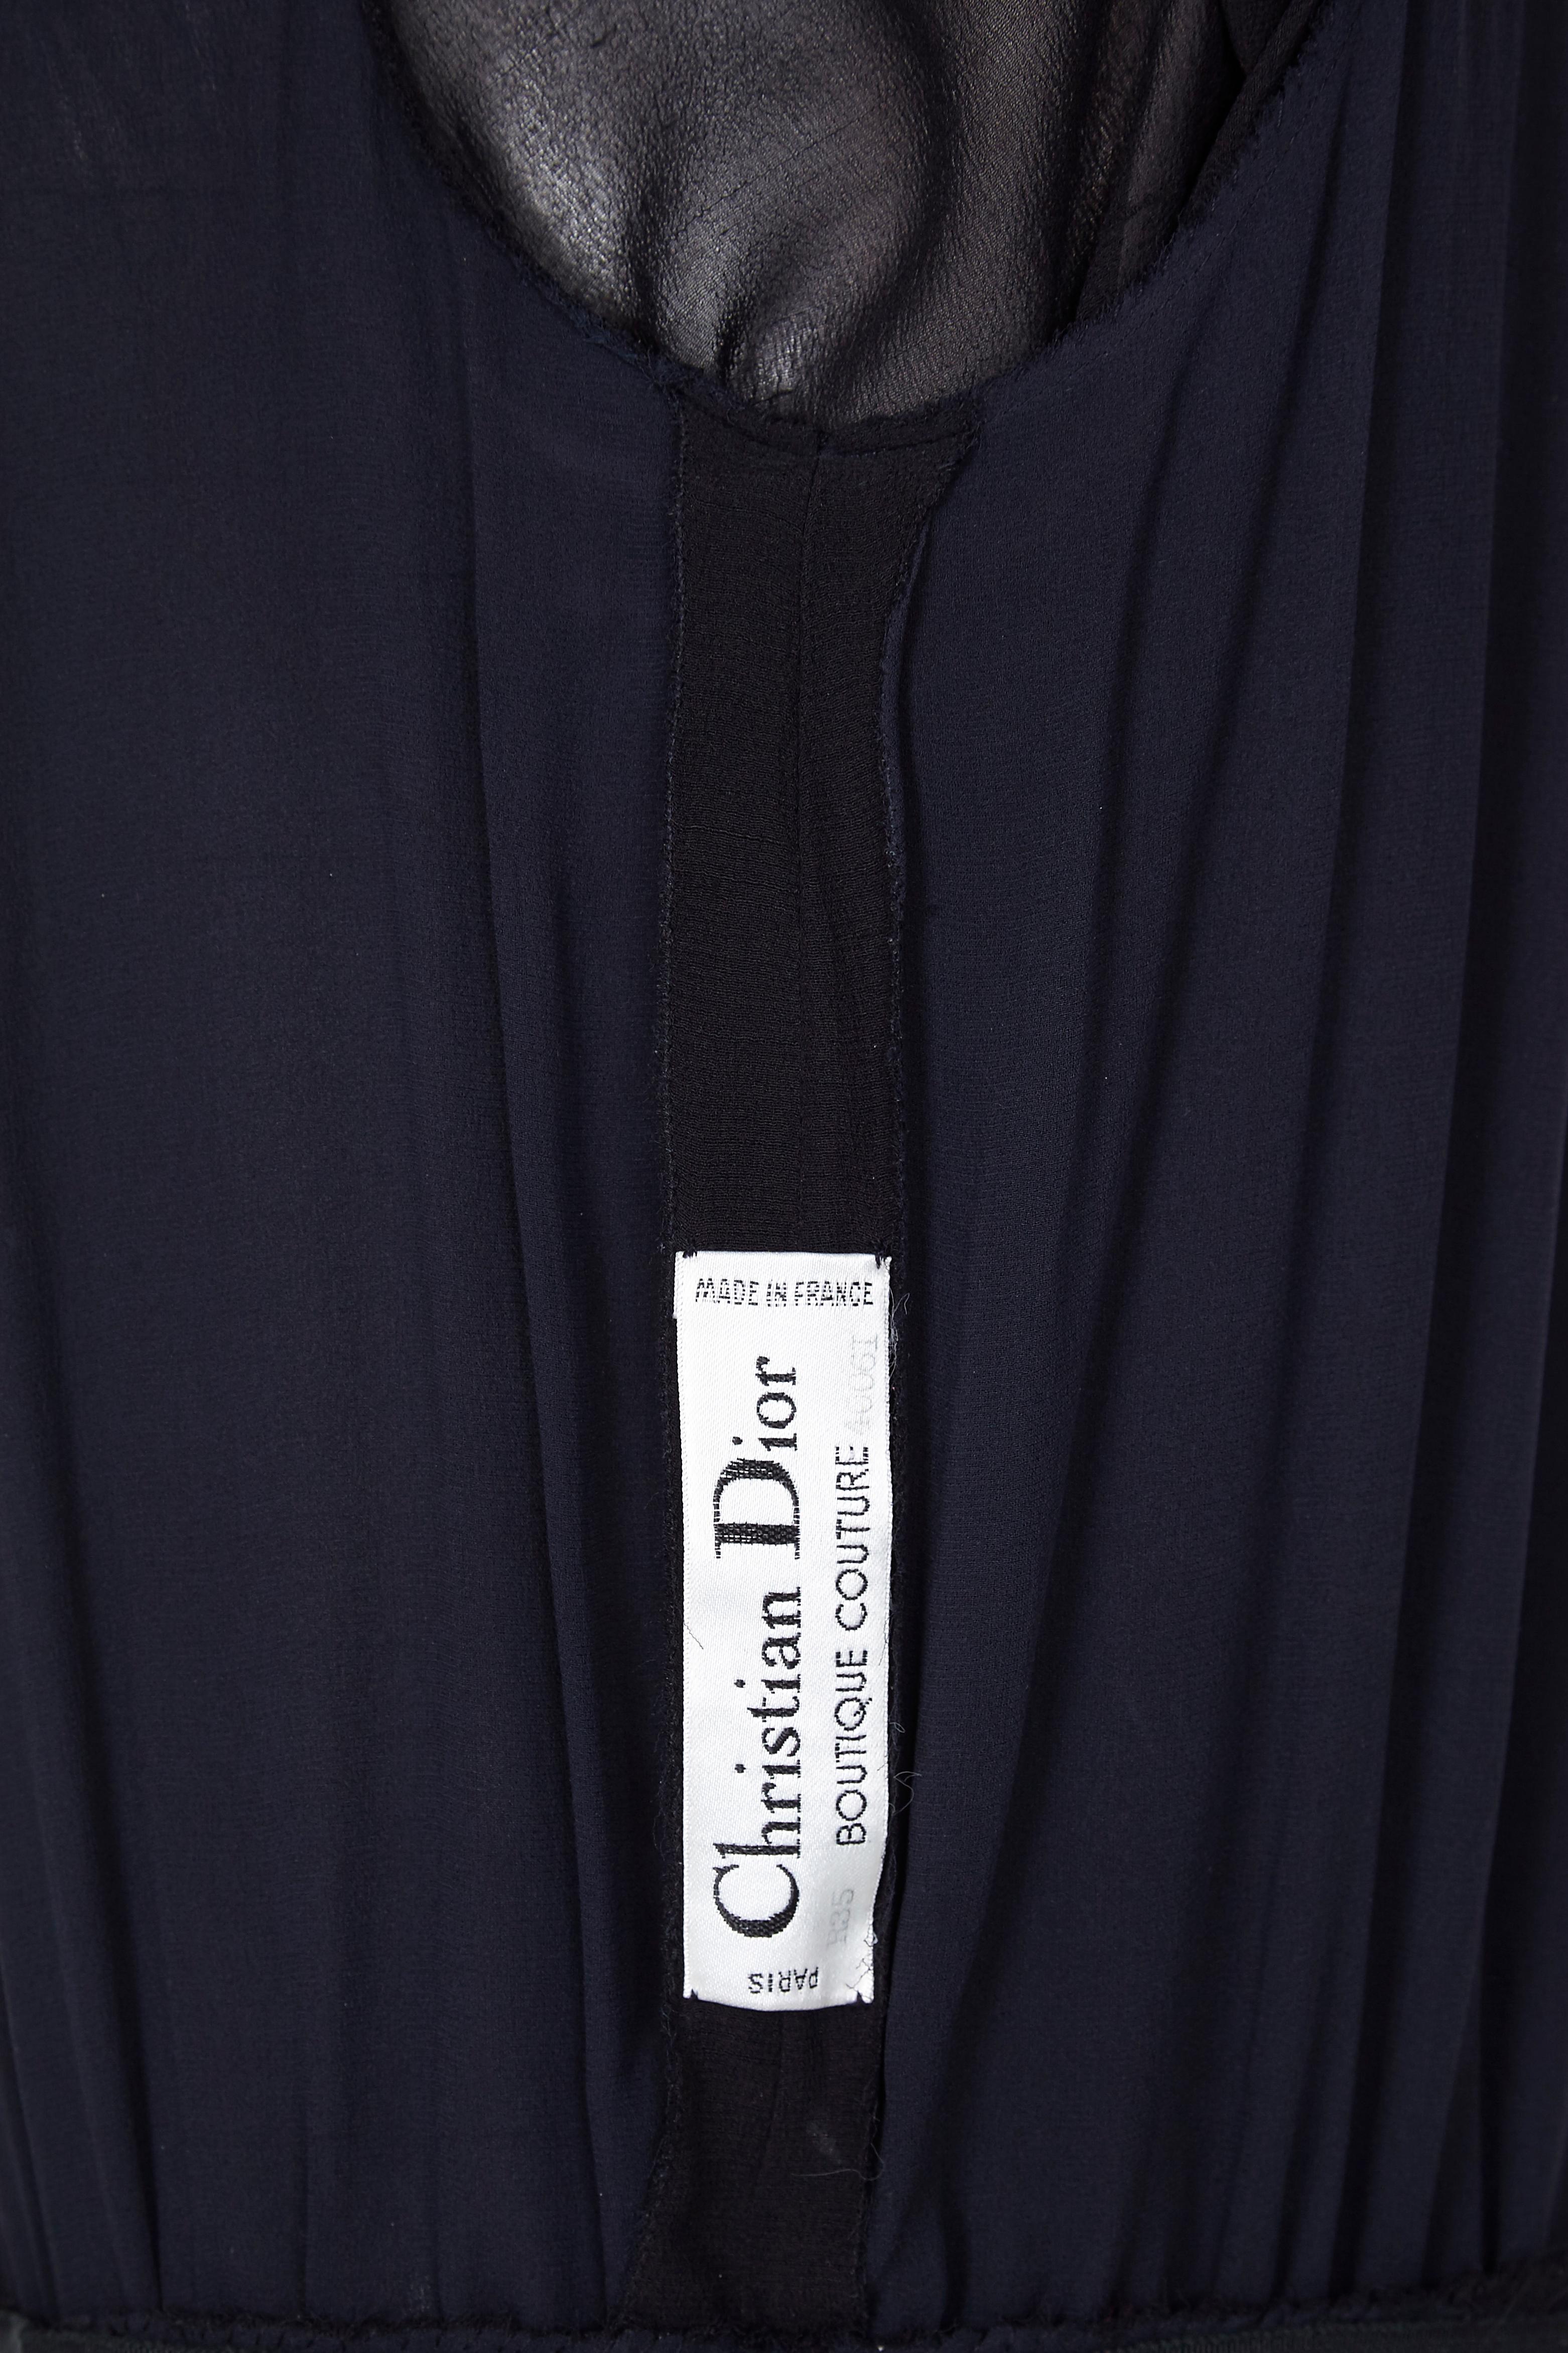 1970s Christian Dior Boutique Couture Label Black Silk Chiffon Dress 2